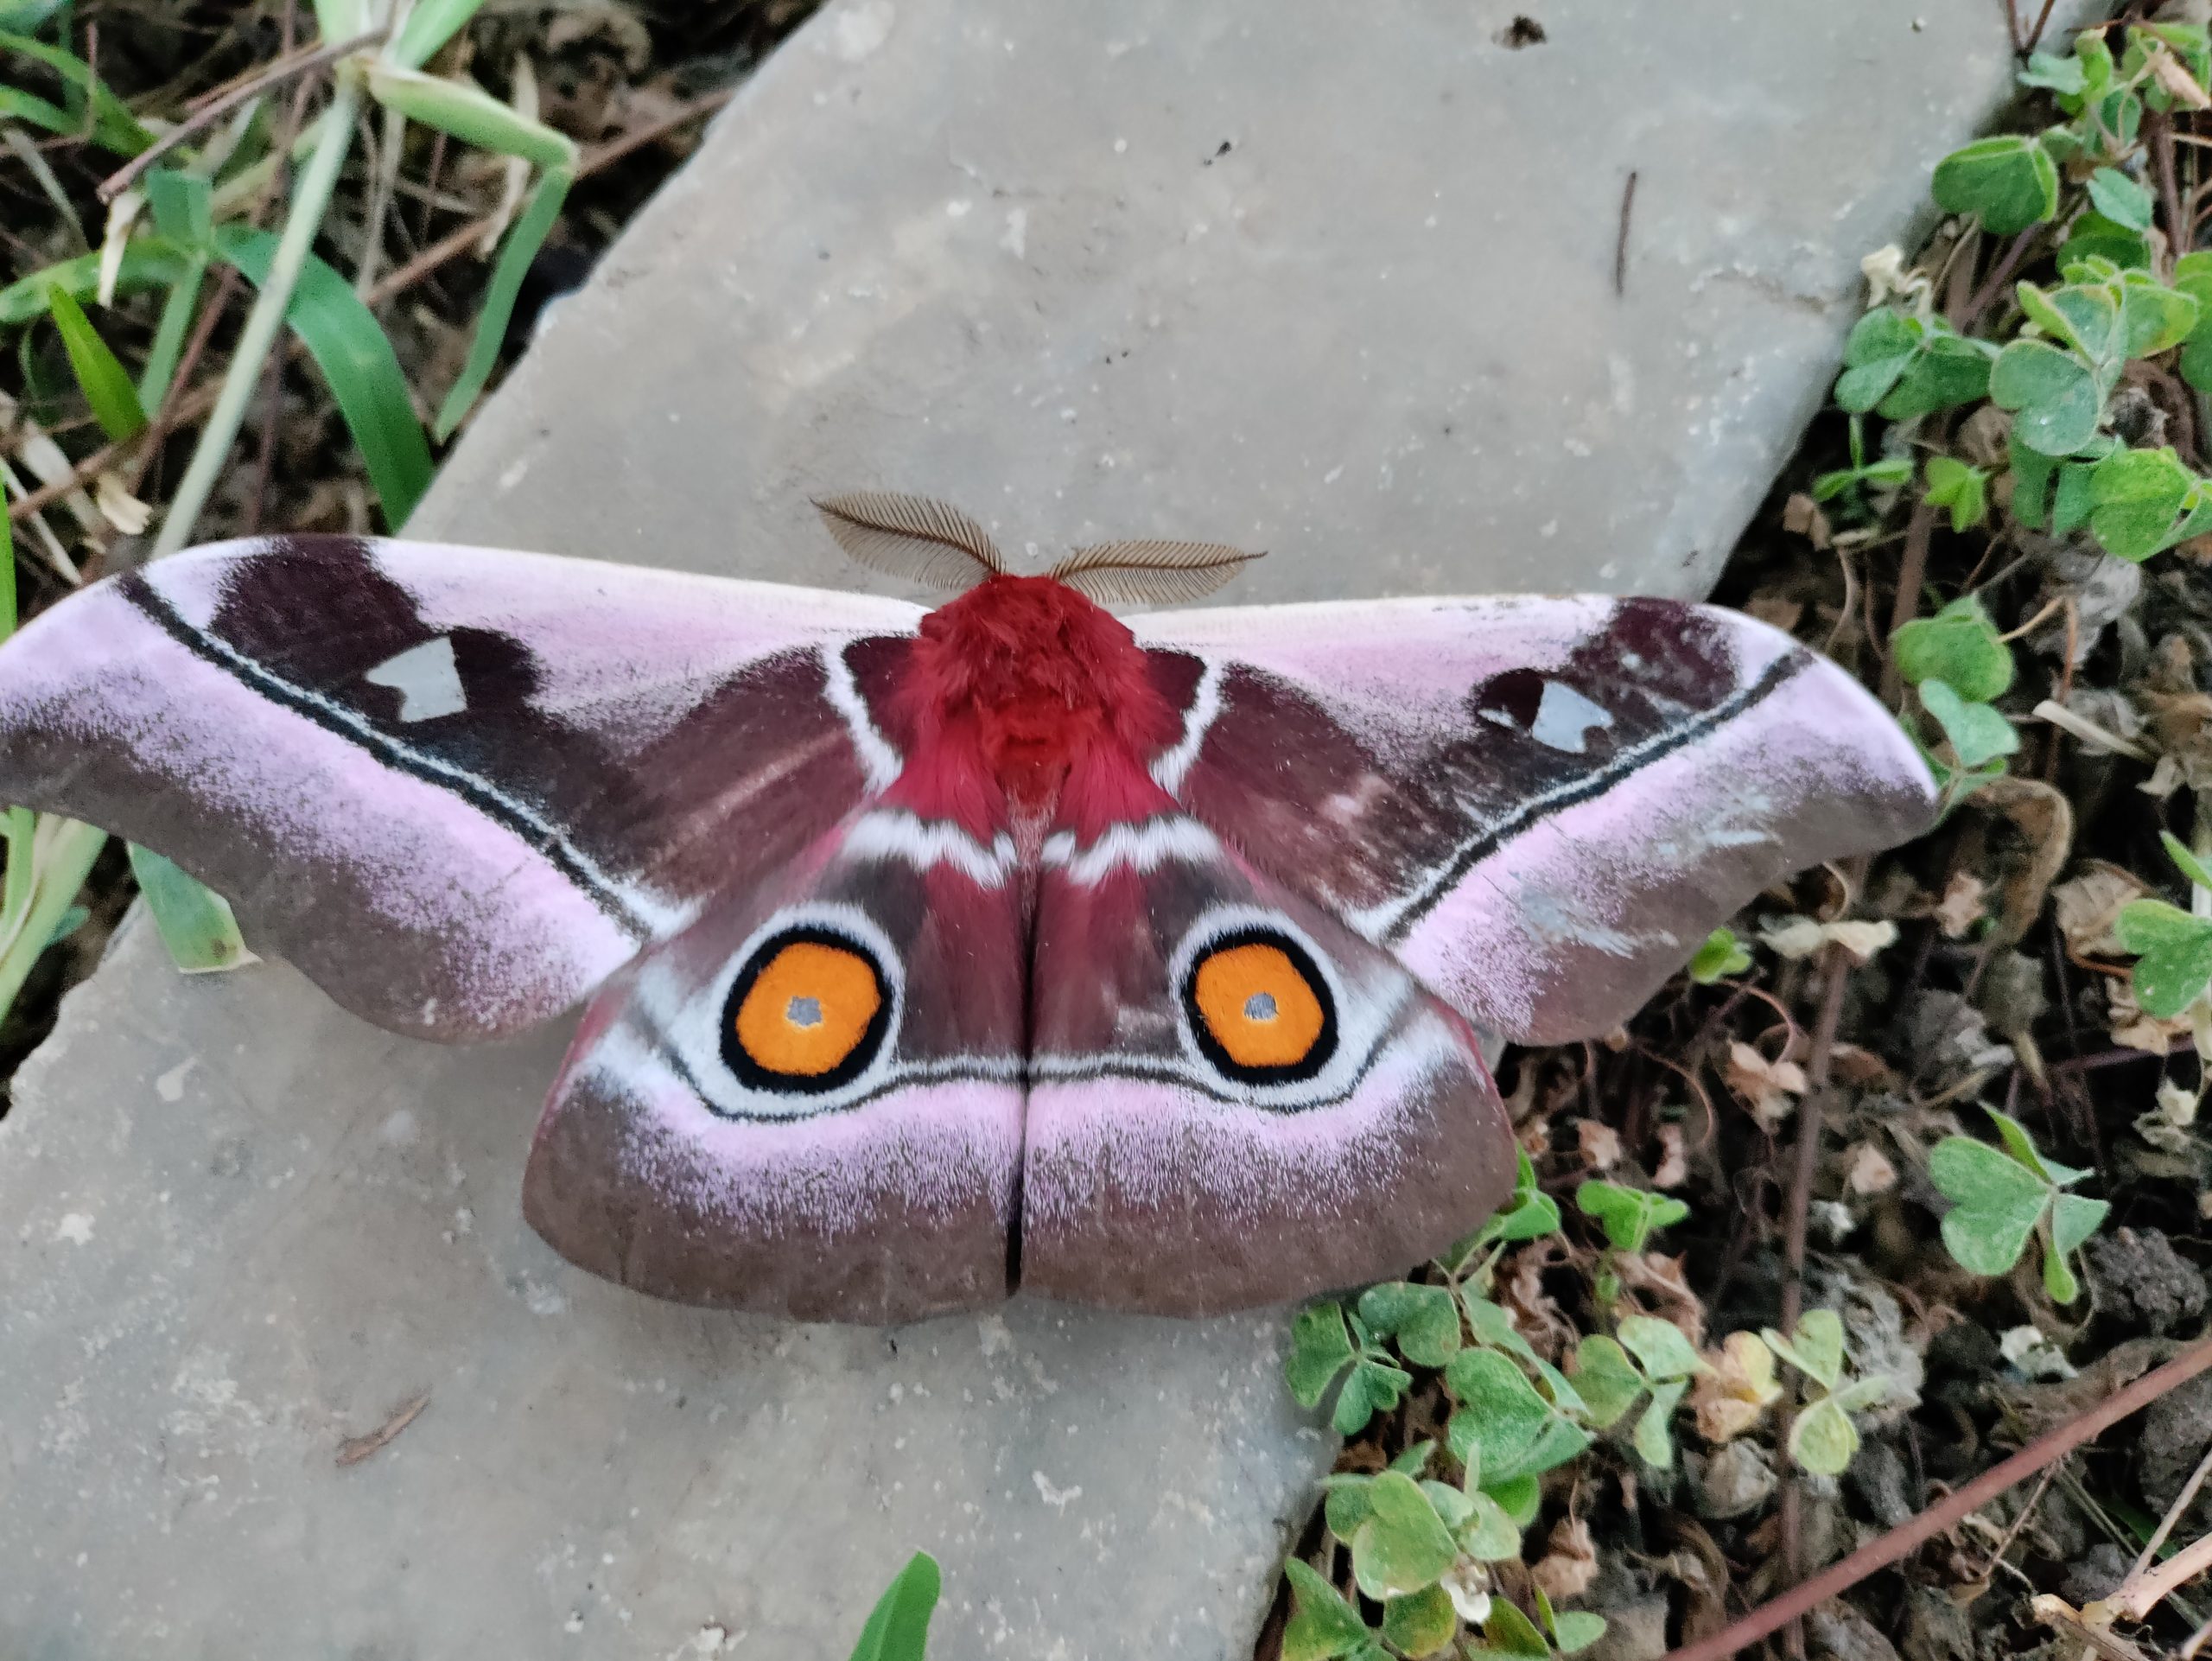 Caterpillar changed to moth